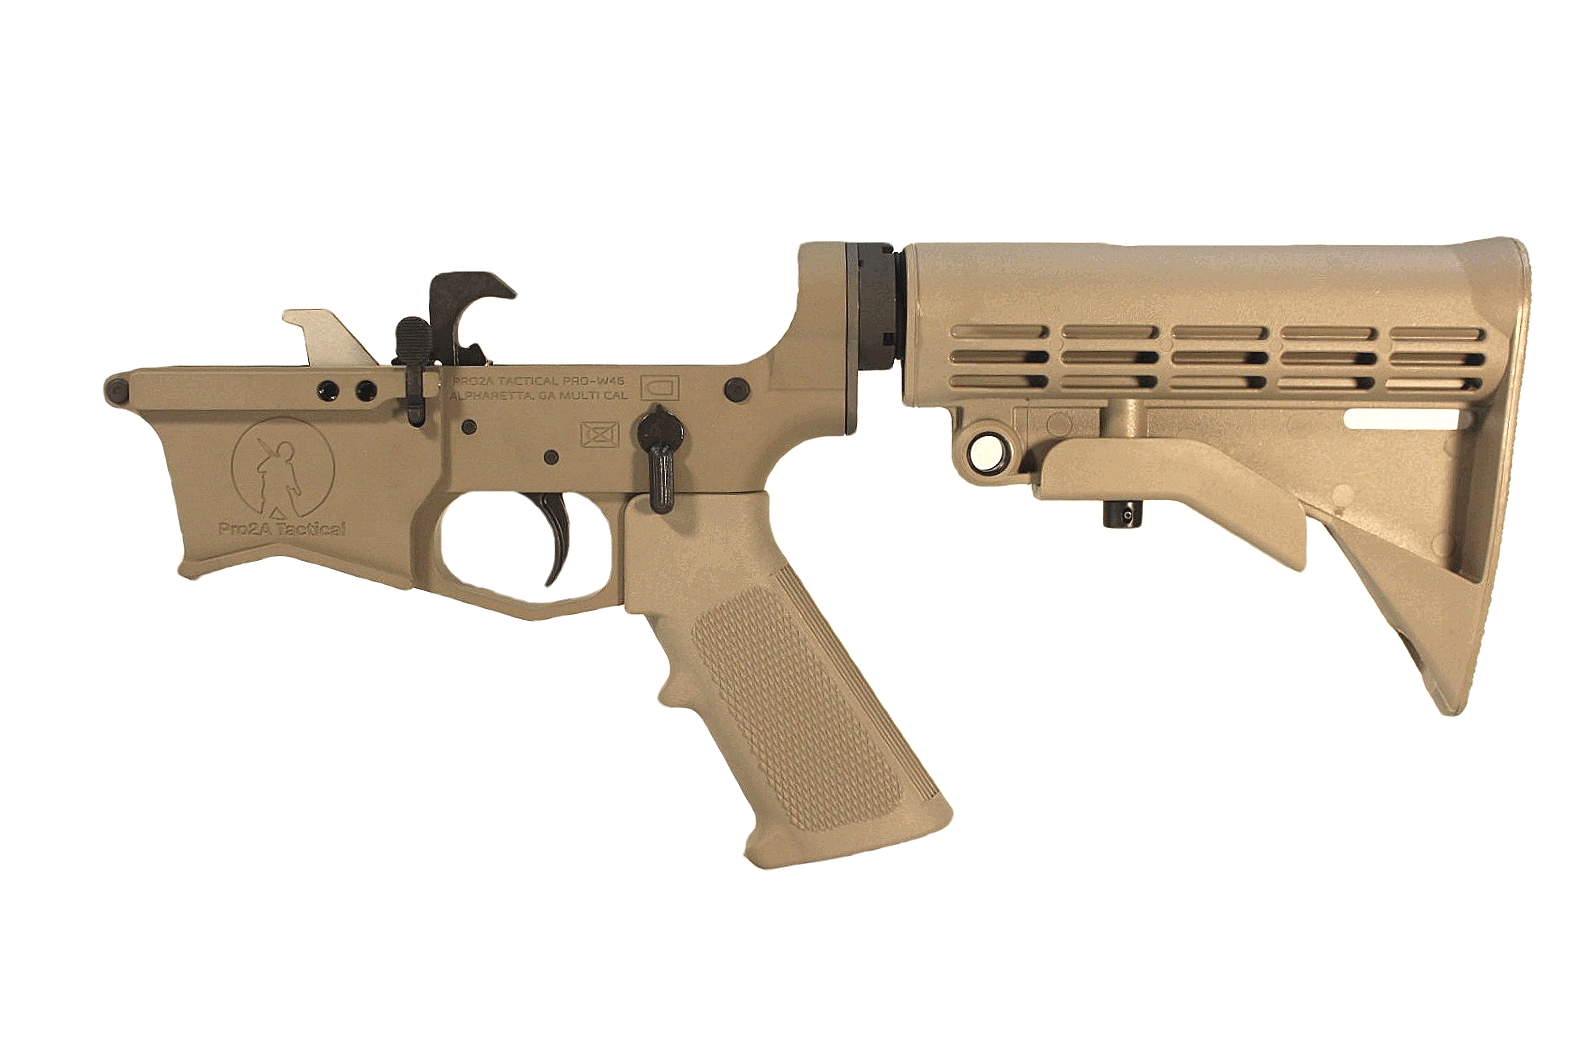 Complete Rifle AR-15 45ACP/10mm AR-45 Billet Lower Receiver FDE Color | Pro2A Tactical